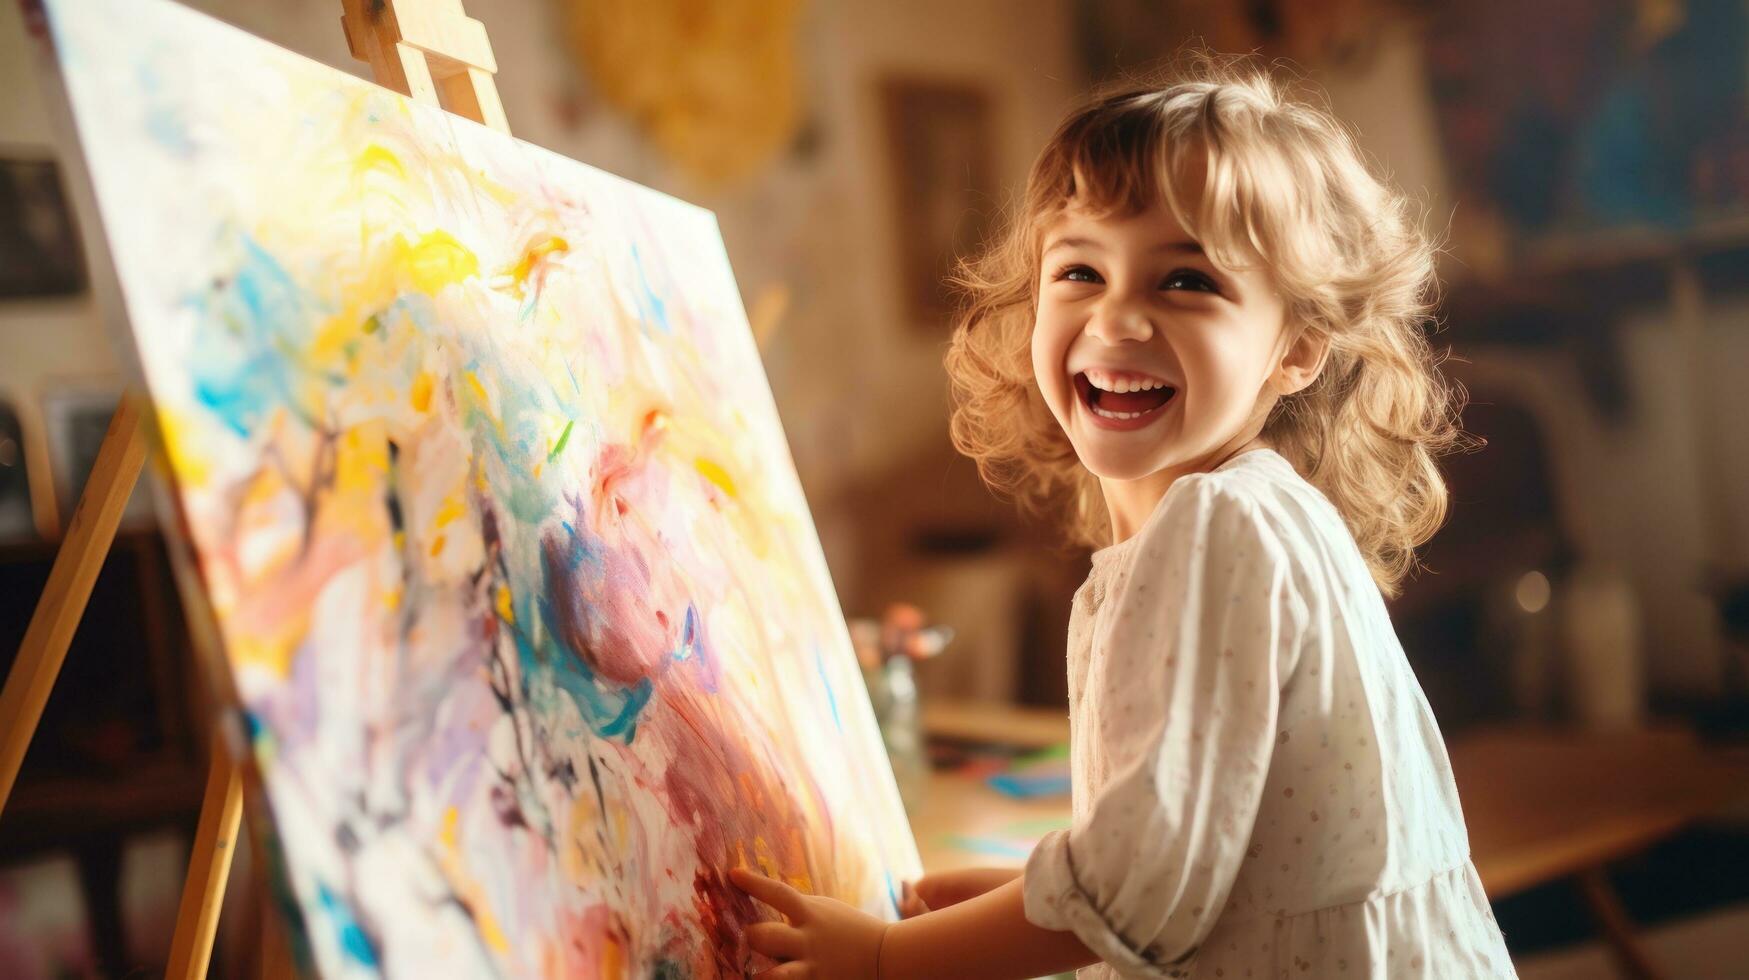 un pequeño niña pintura un resumen pintura en un caballete foto